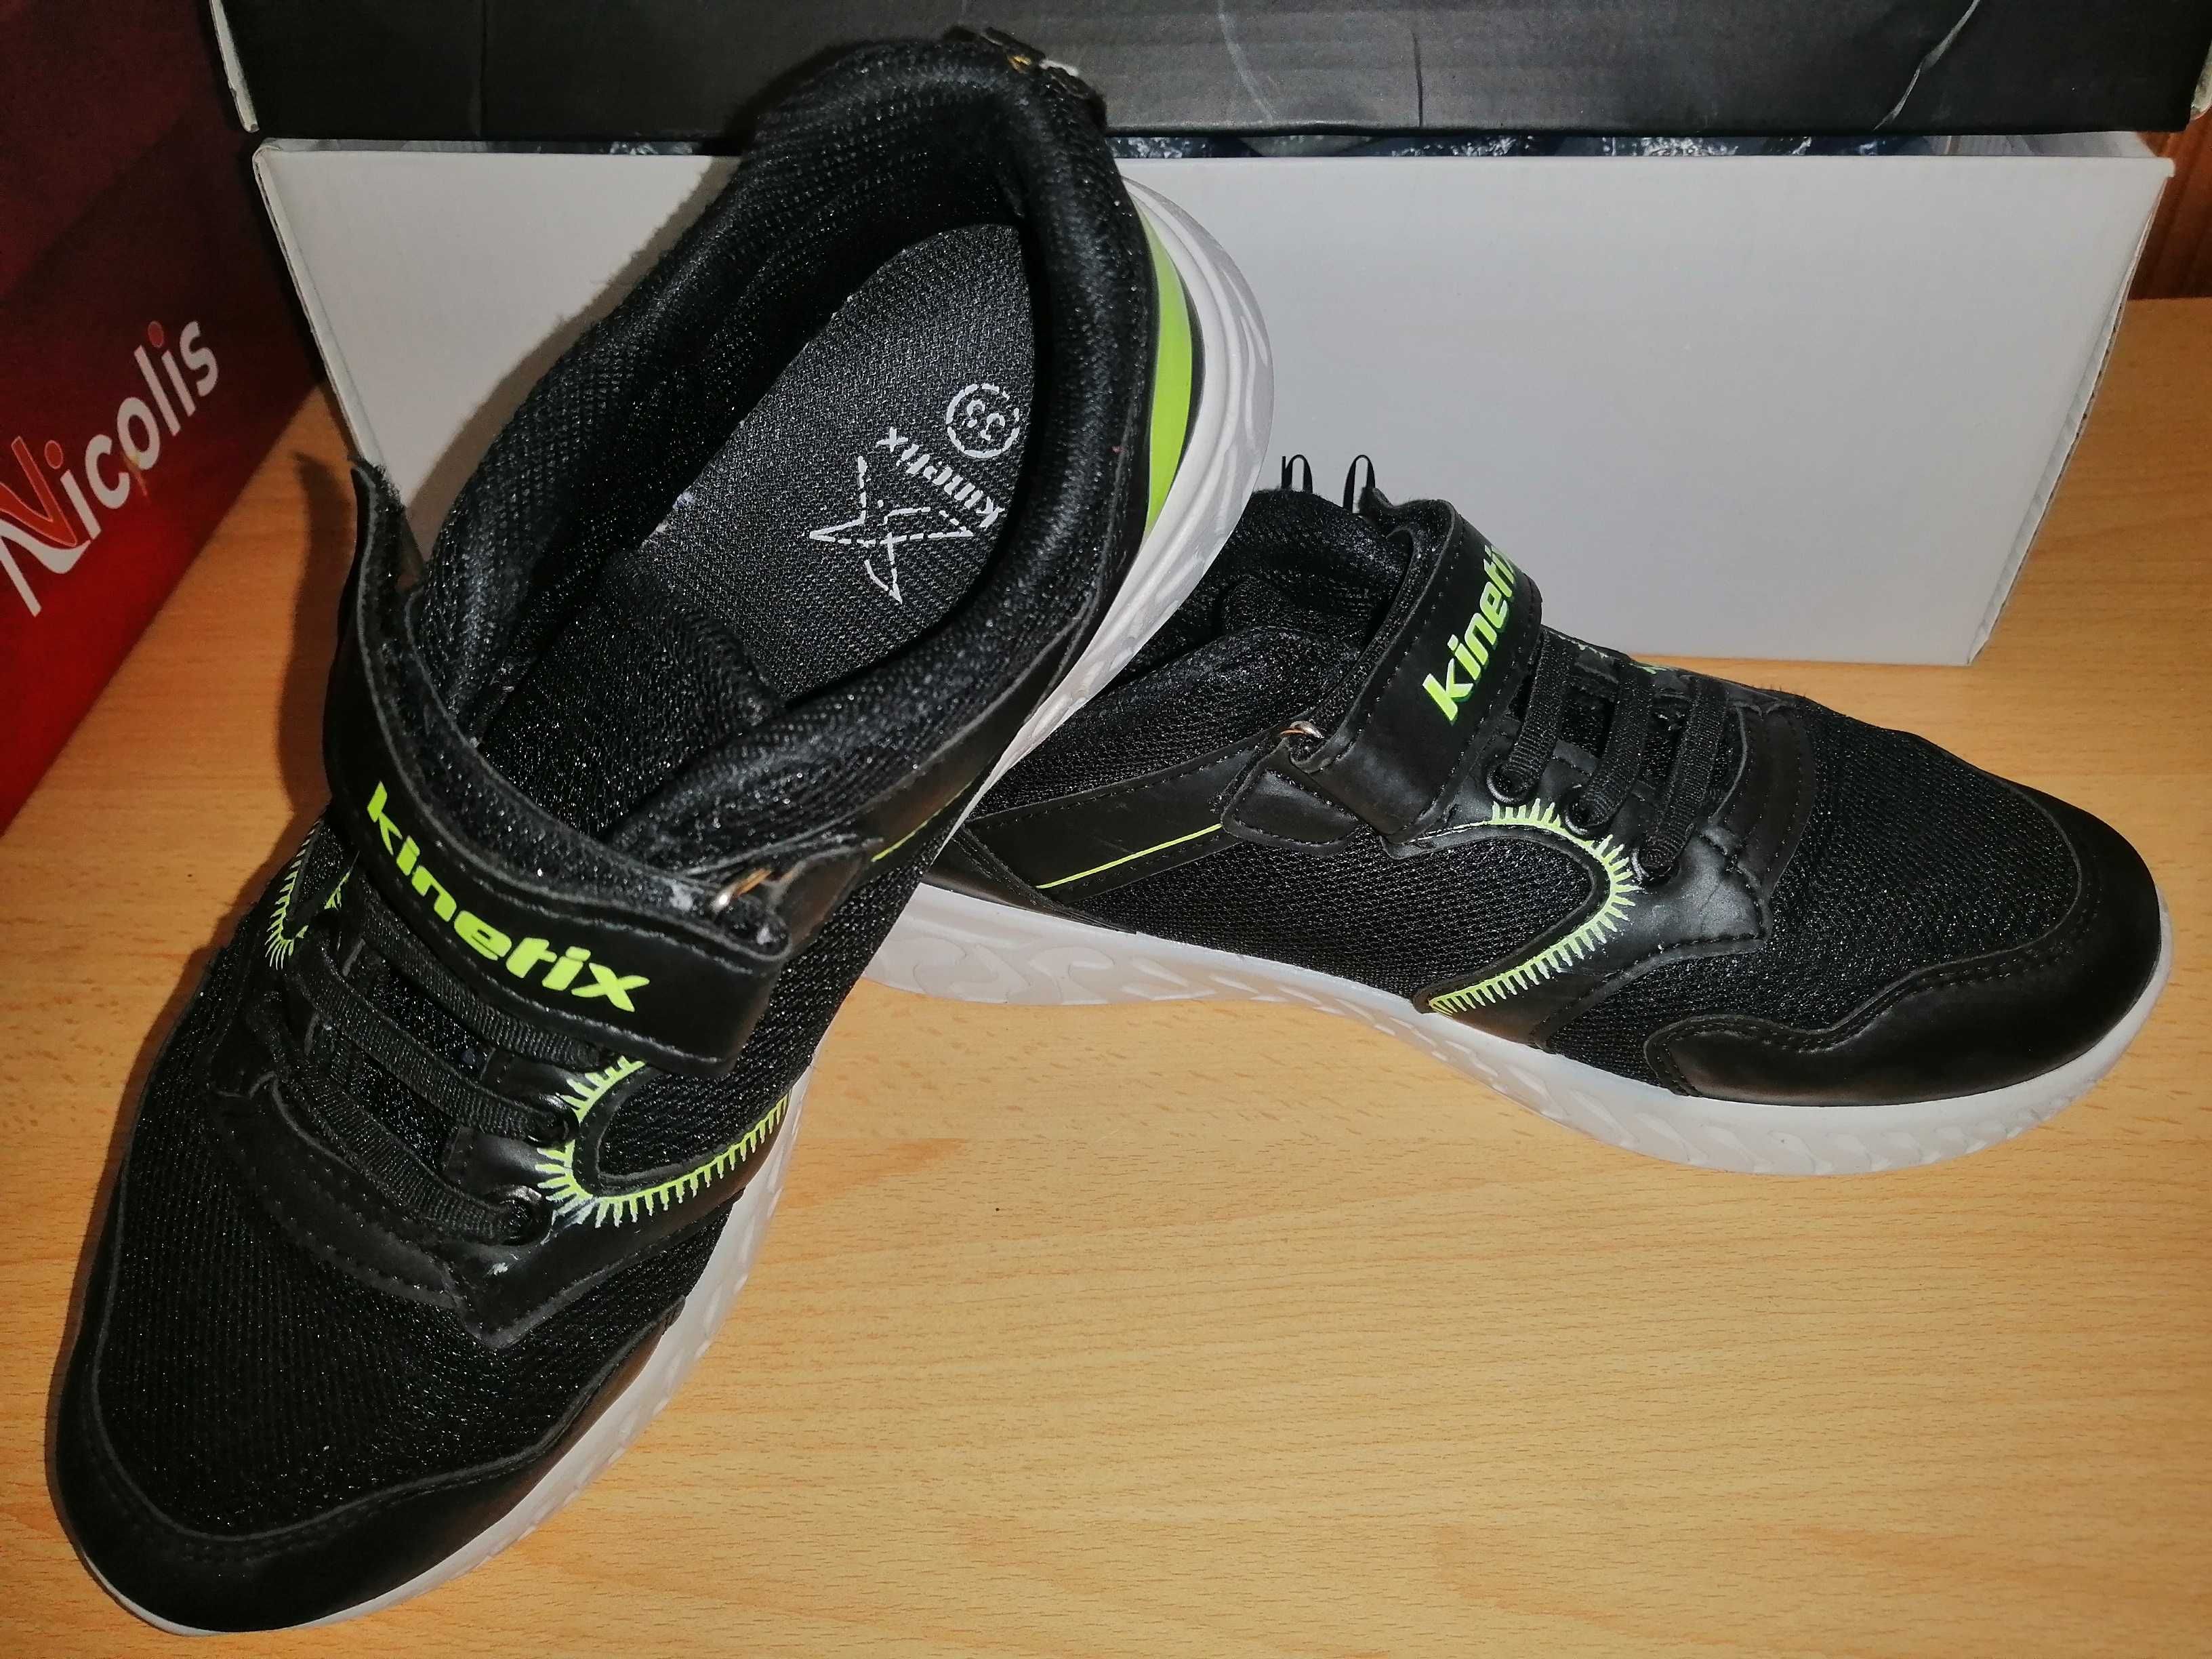 Adidasi/pantofi sport Kinetix cu scai